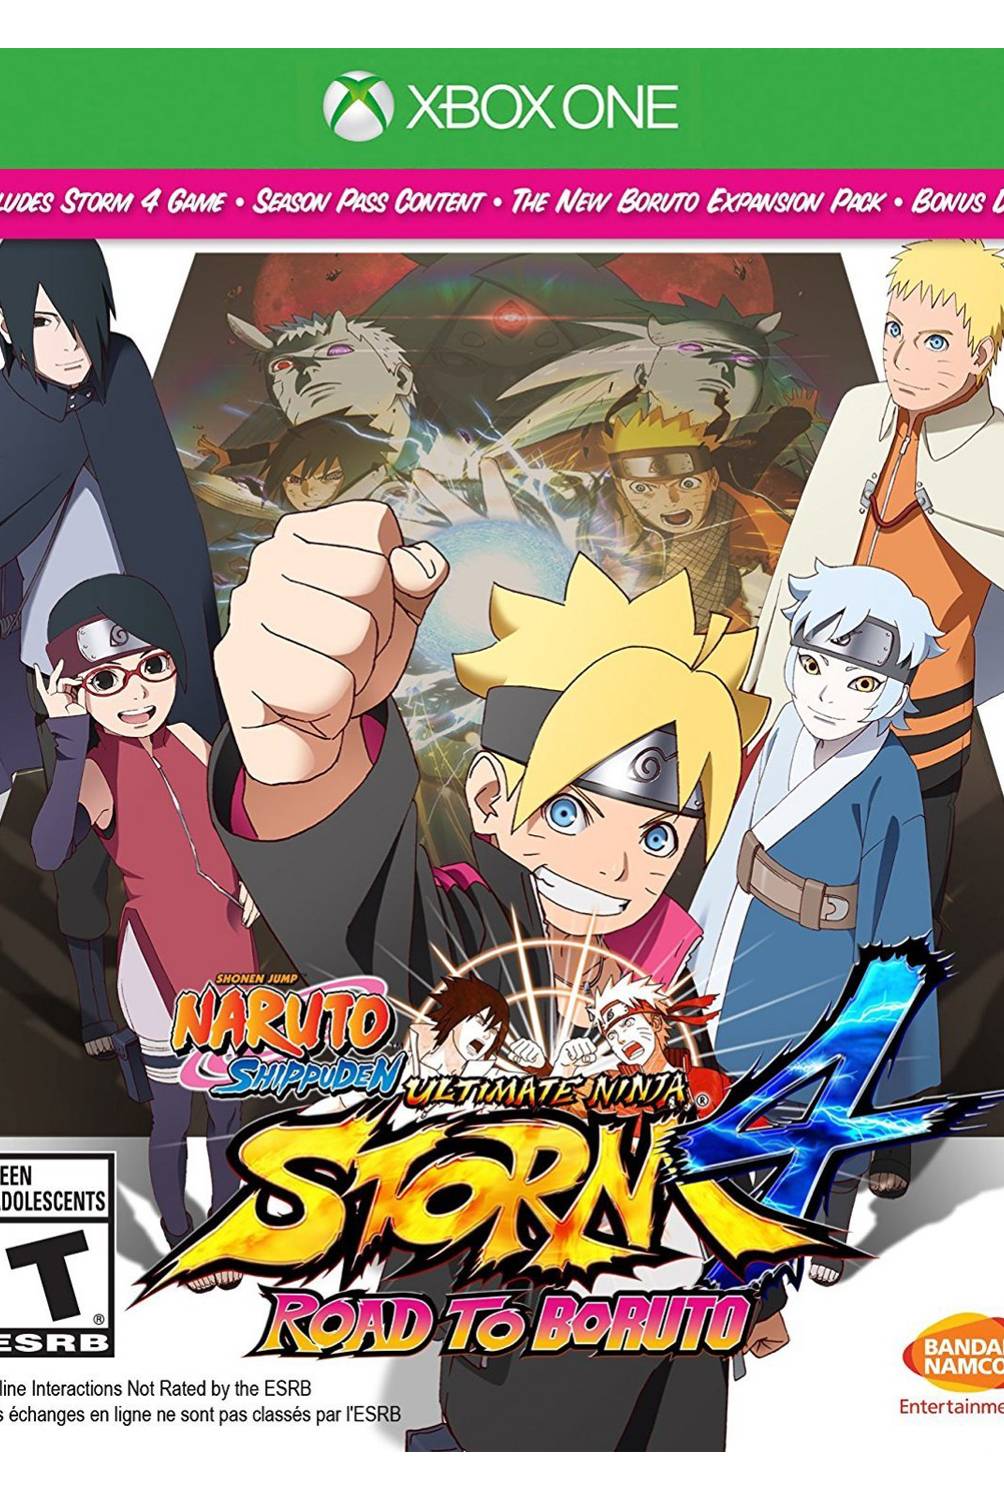 MICROSOFT - Naruto Ninja Storm 4 Road To Boruto (XONE)